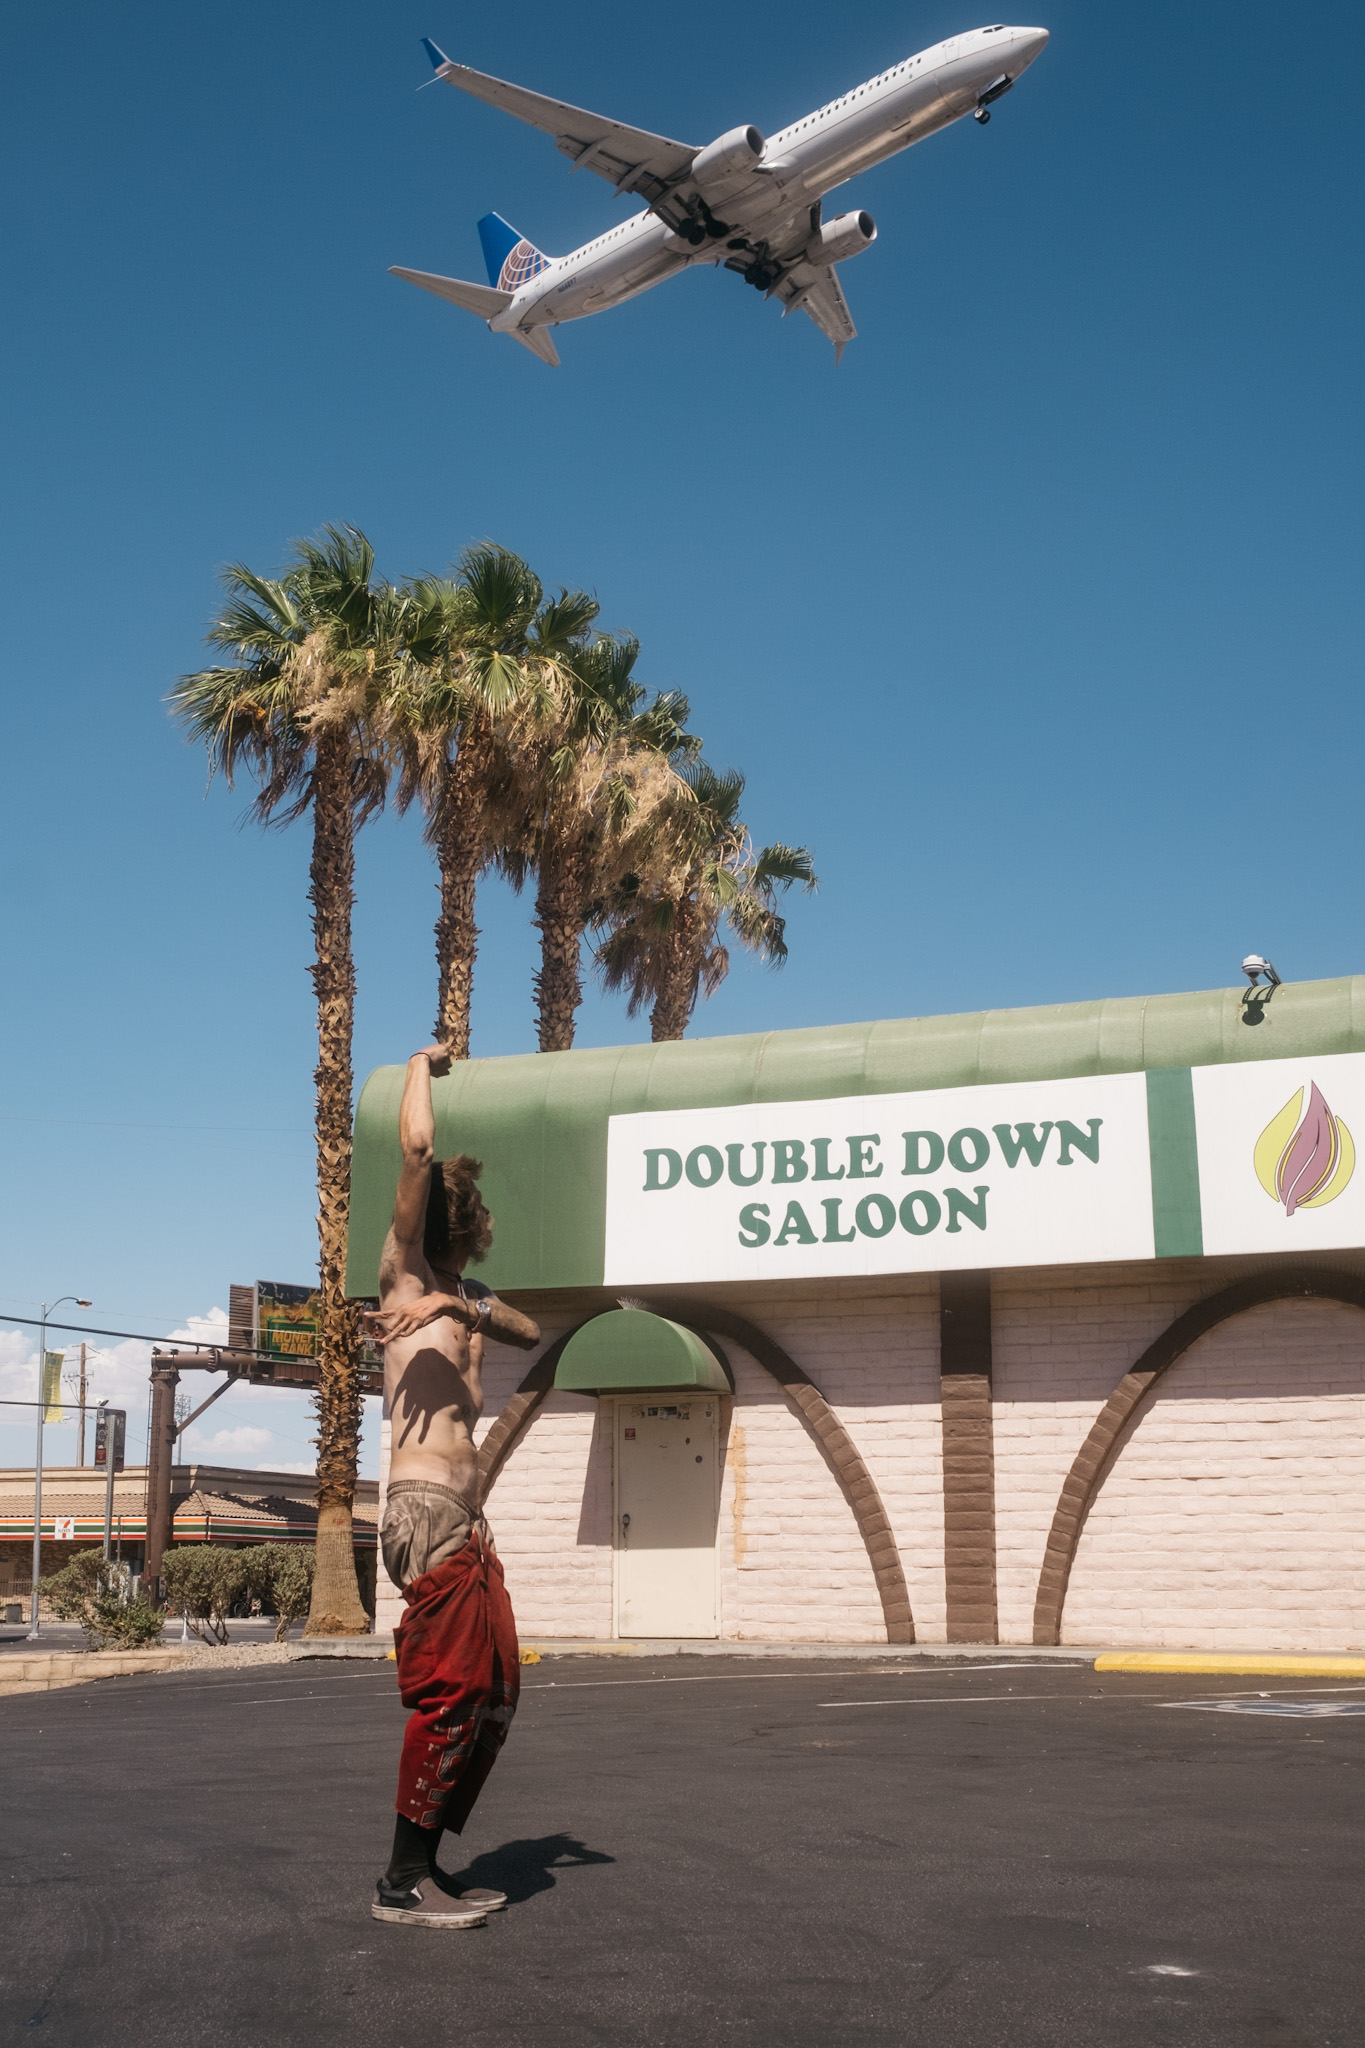 Outside the Double Down Saloon in Las Vegas